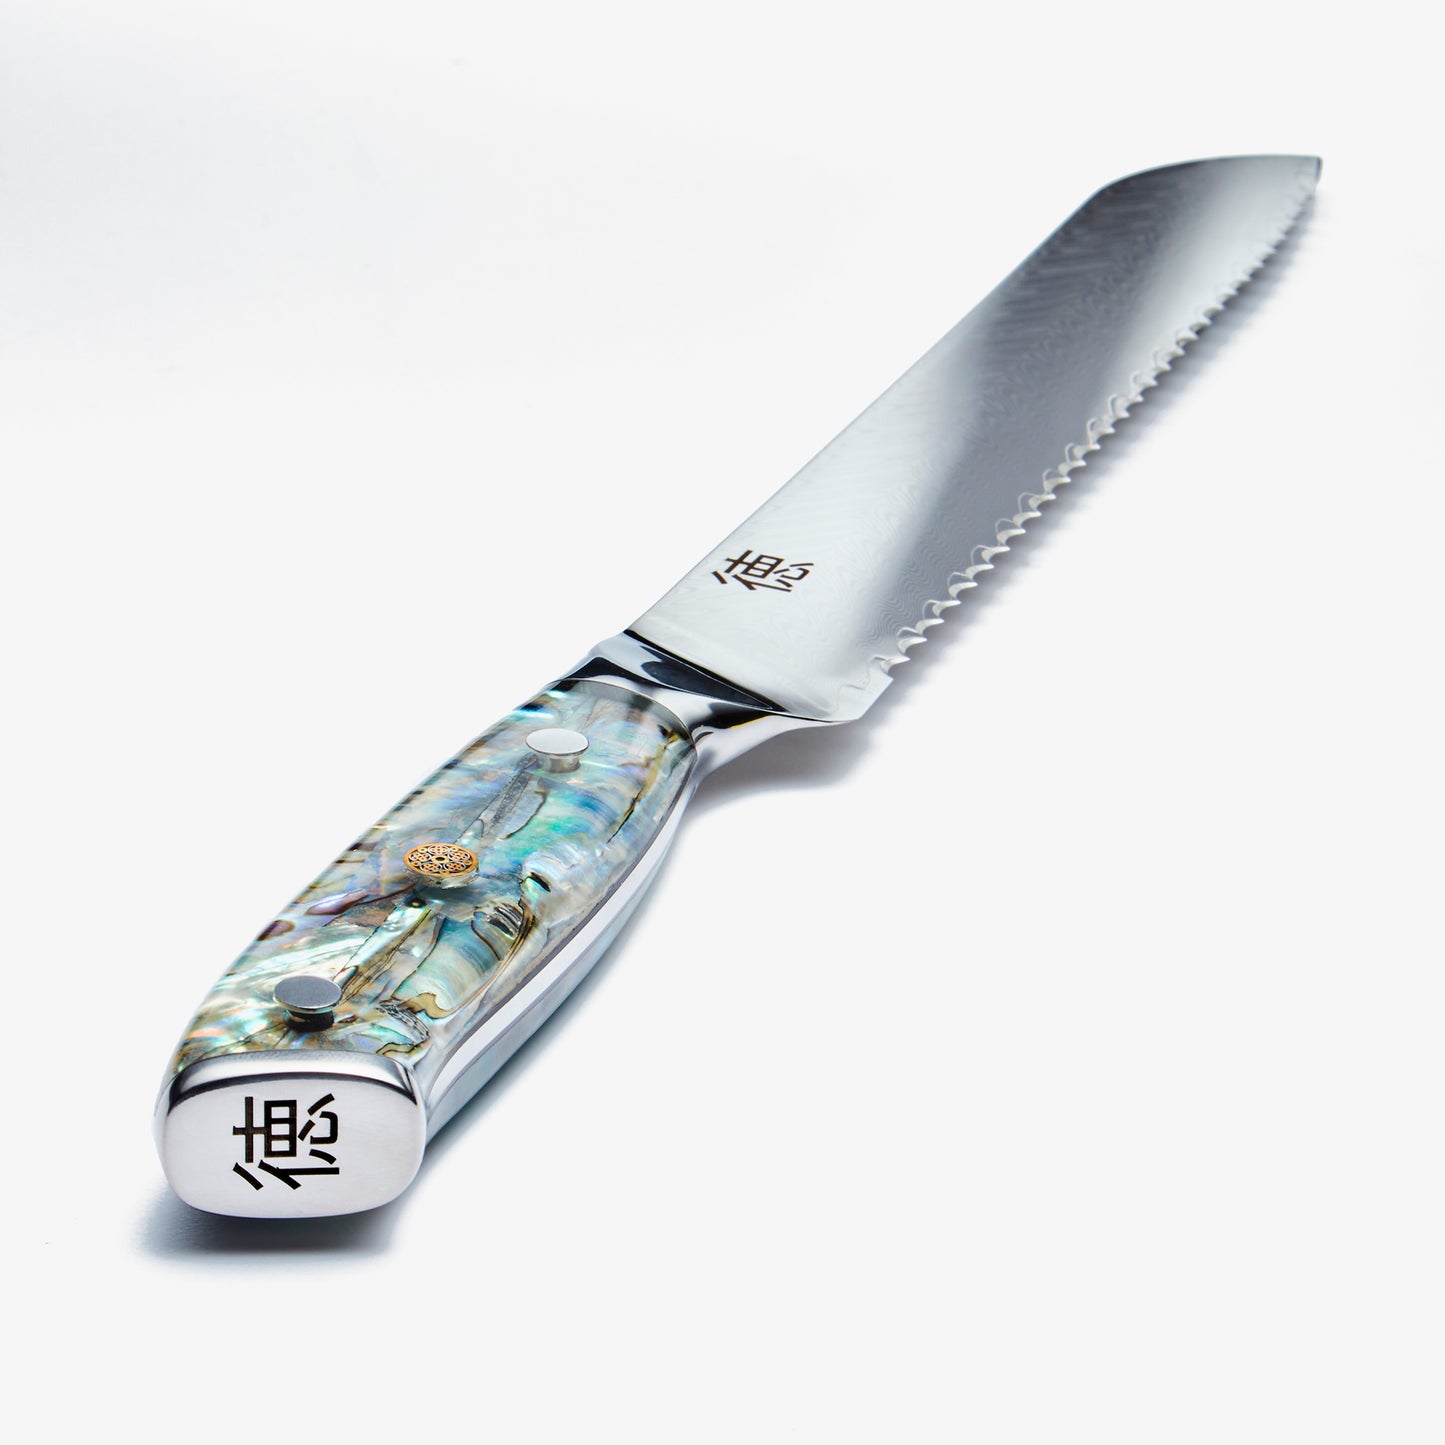 Chikashi (ちかし) 8 tommer brødkniv